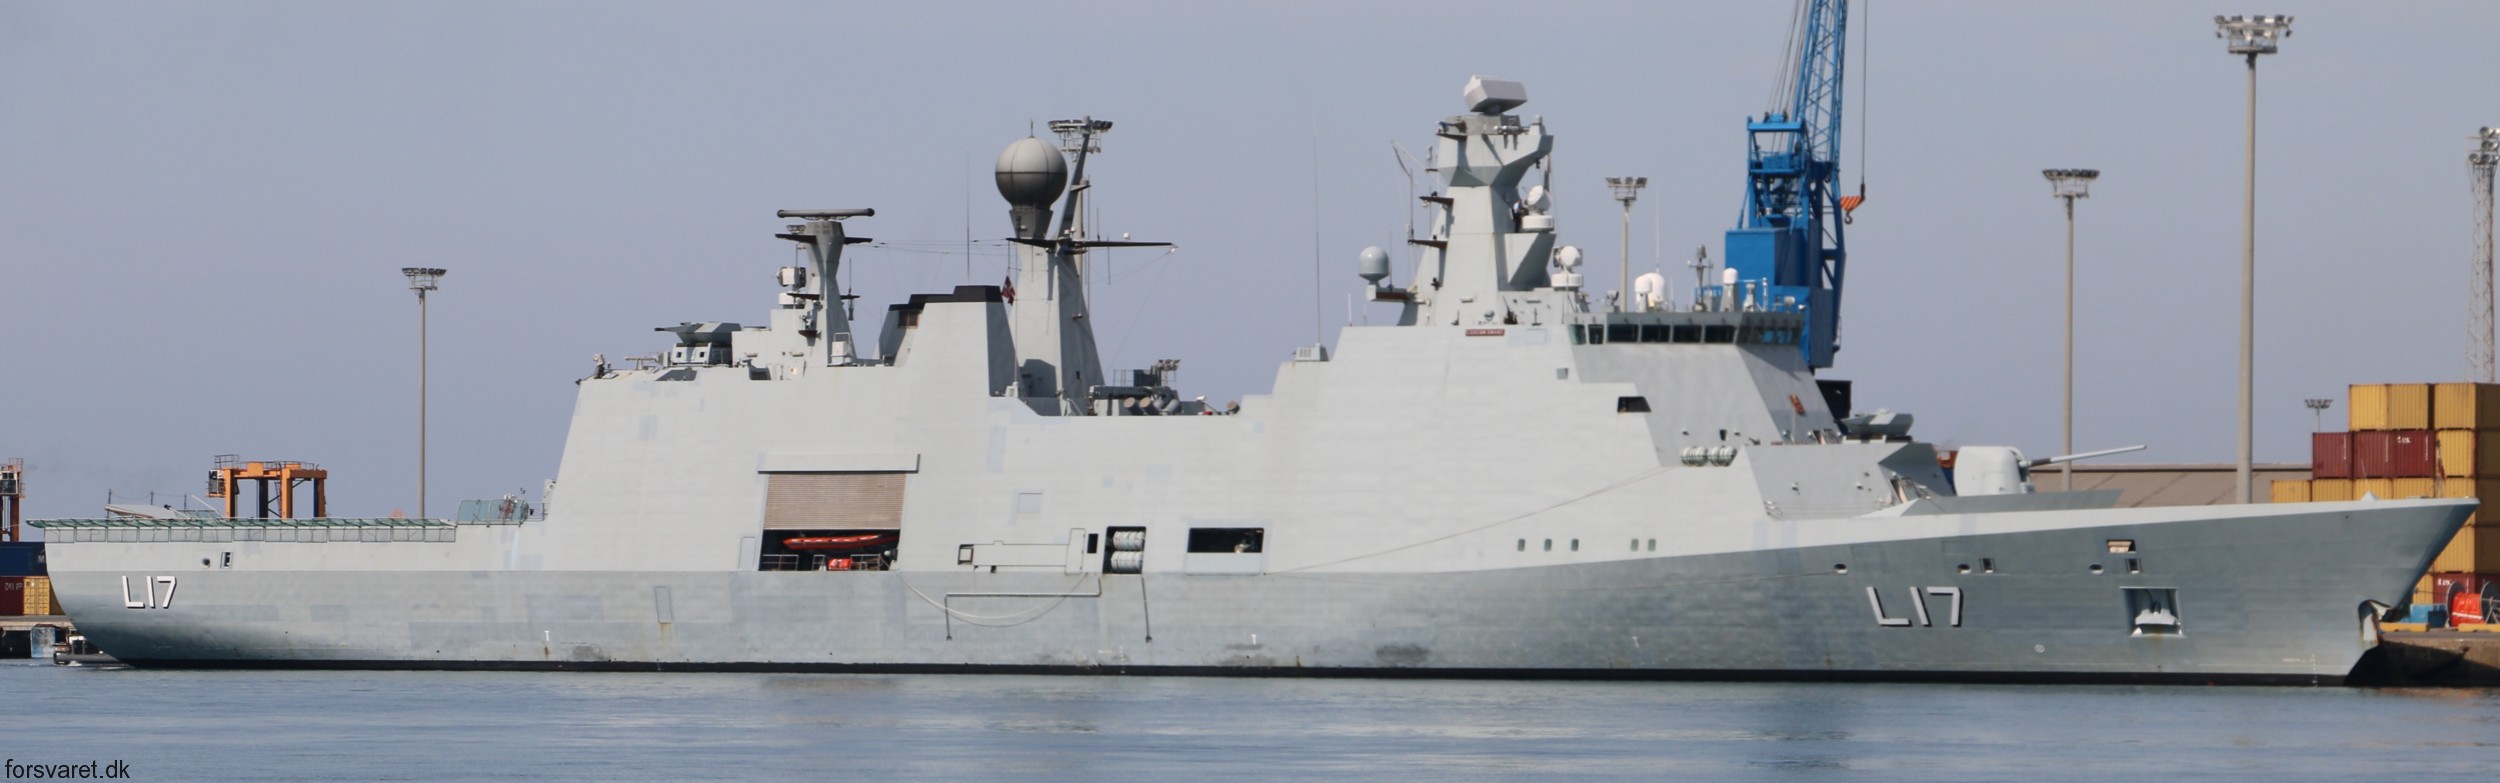 f-342 hdms esbern snare l-17 frigate command support ship royal danish navy 73